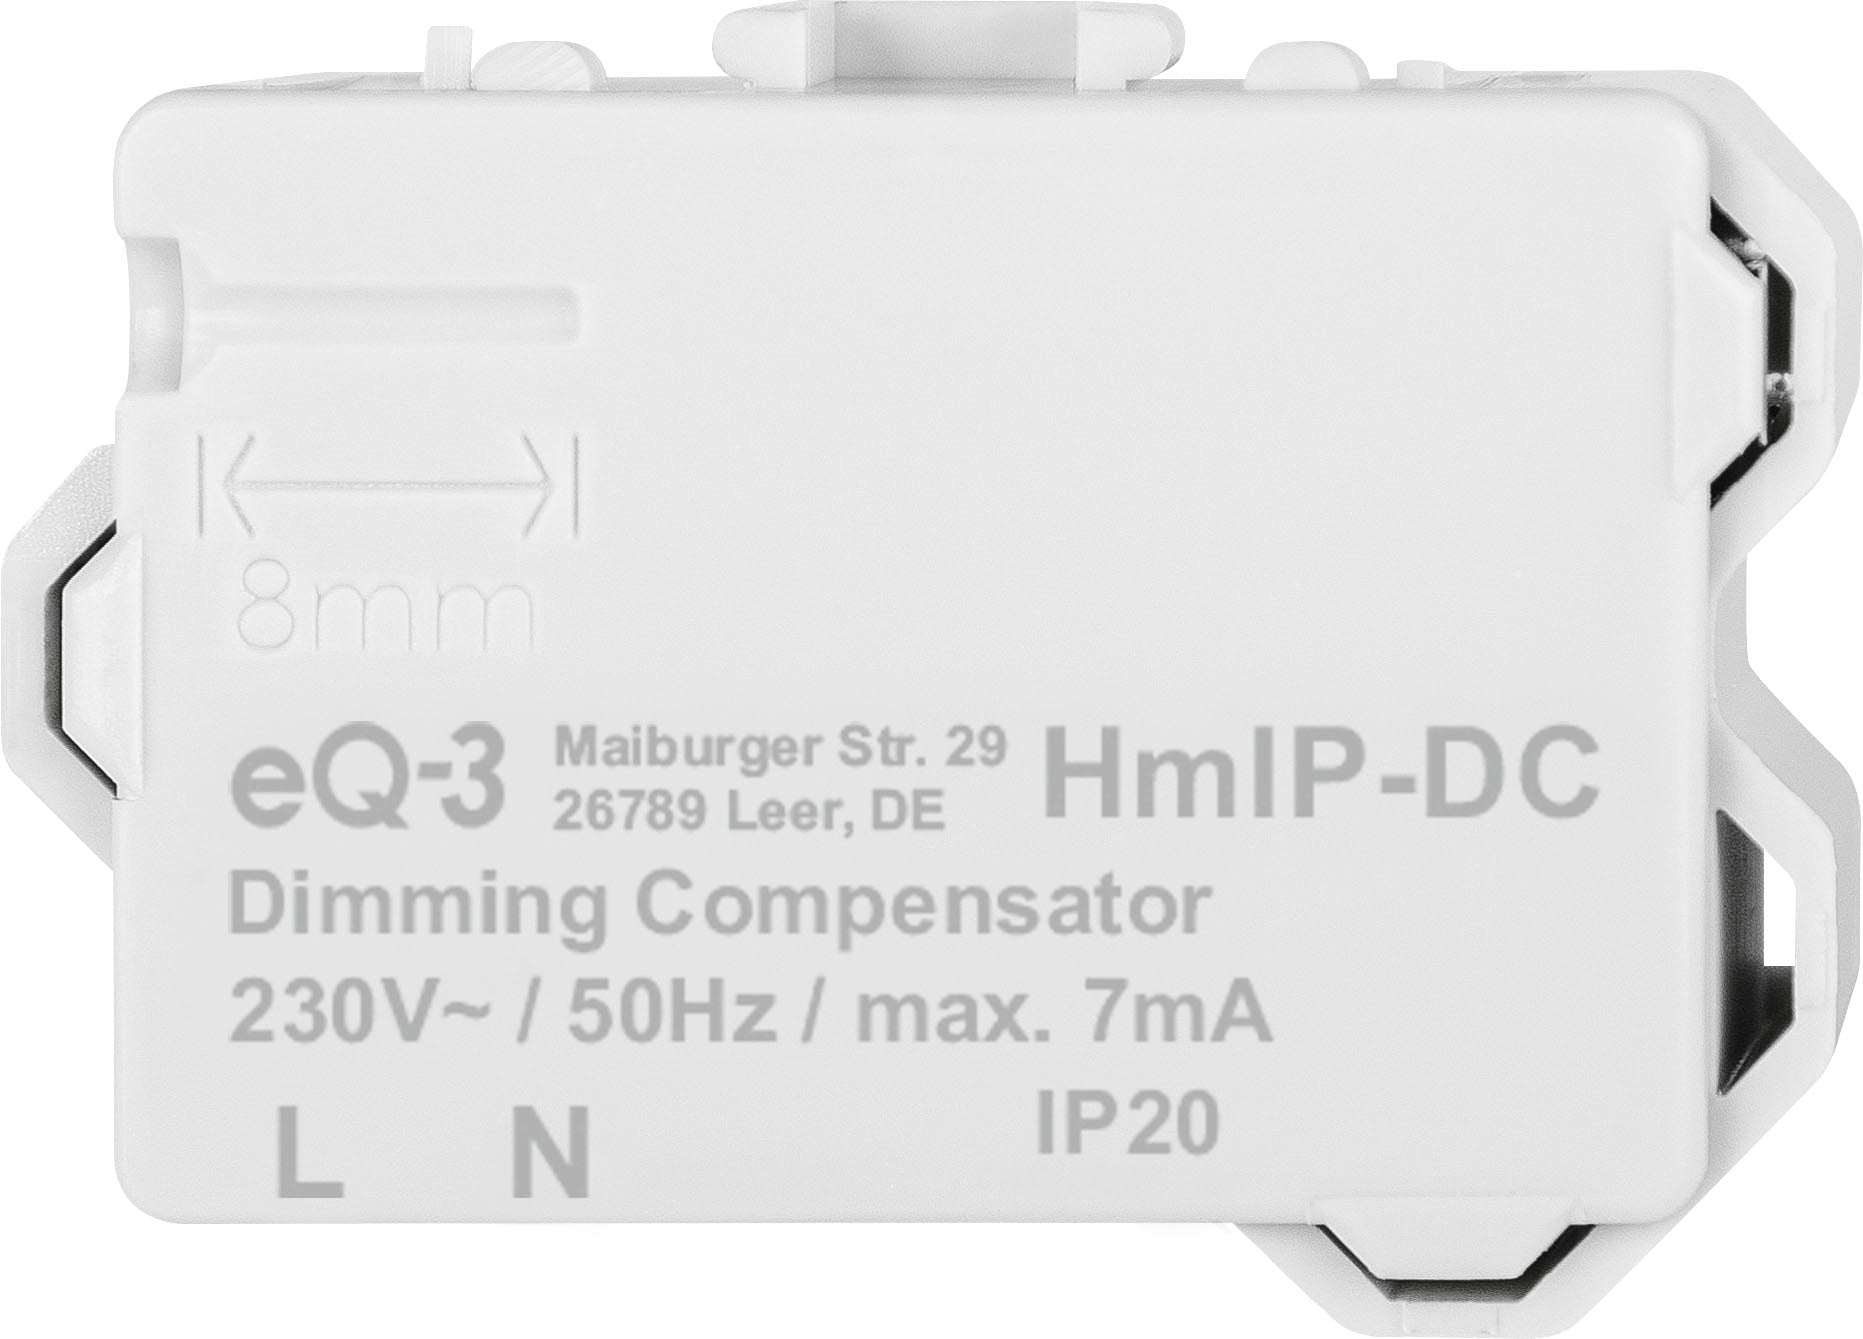 Dimmerkompensator HmIP-DC